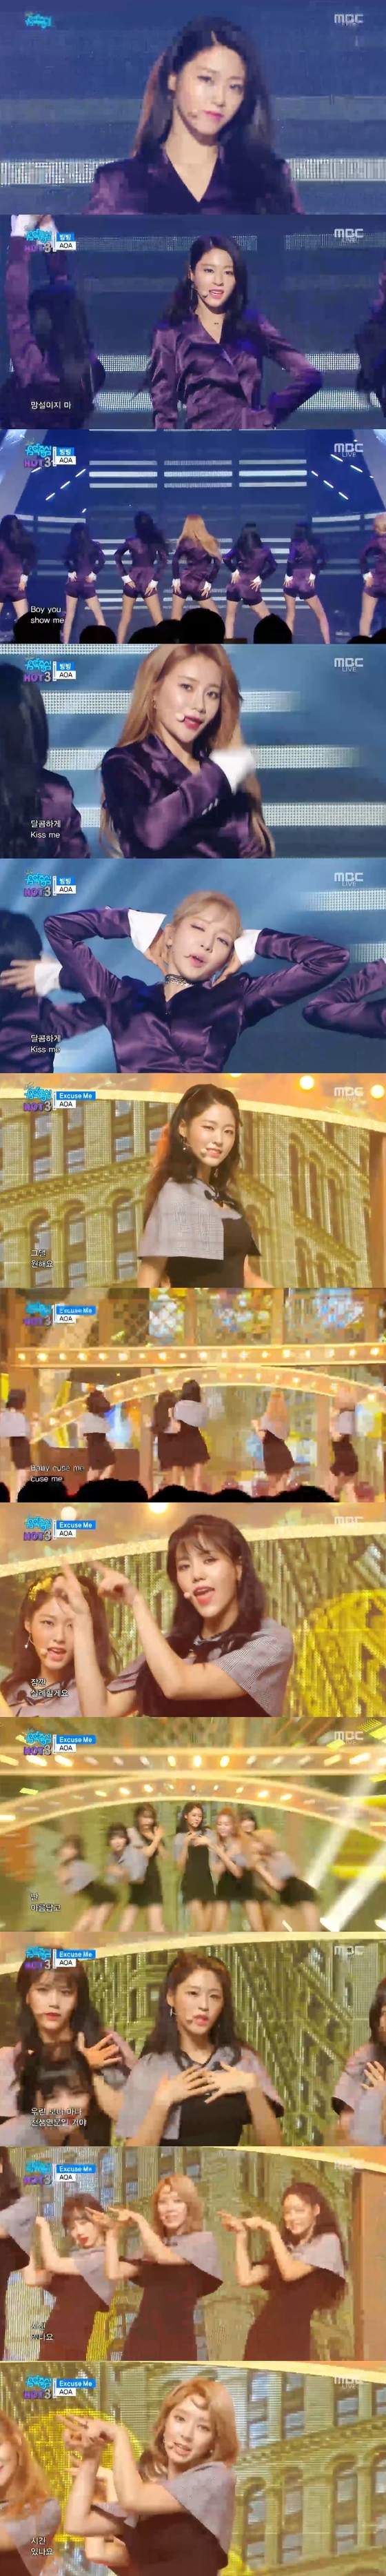 AOA가 '쇼 음악중심'에서 컴백했다. © News1star / MBC '쇼 음악중심' 캡처